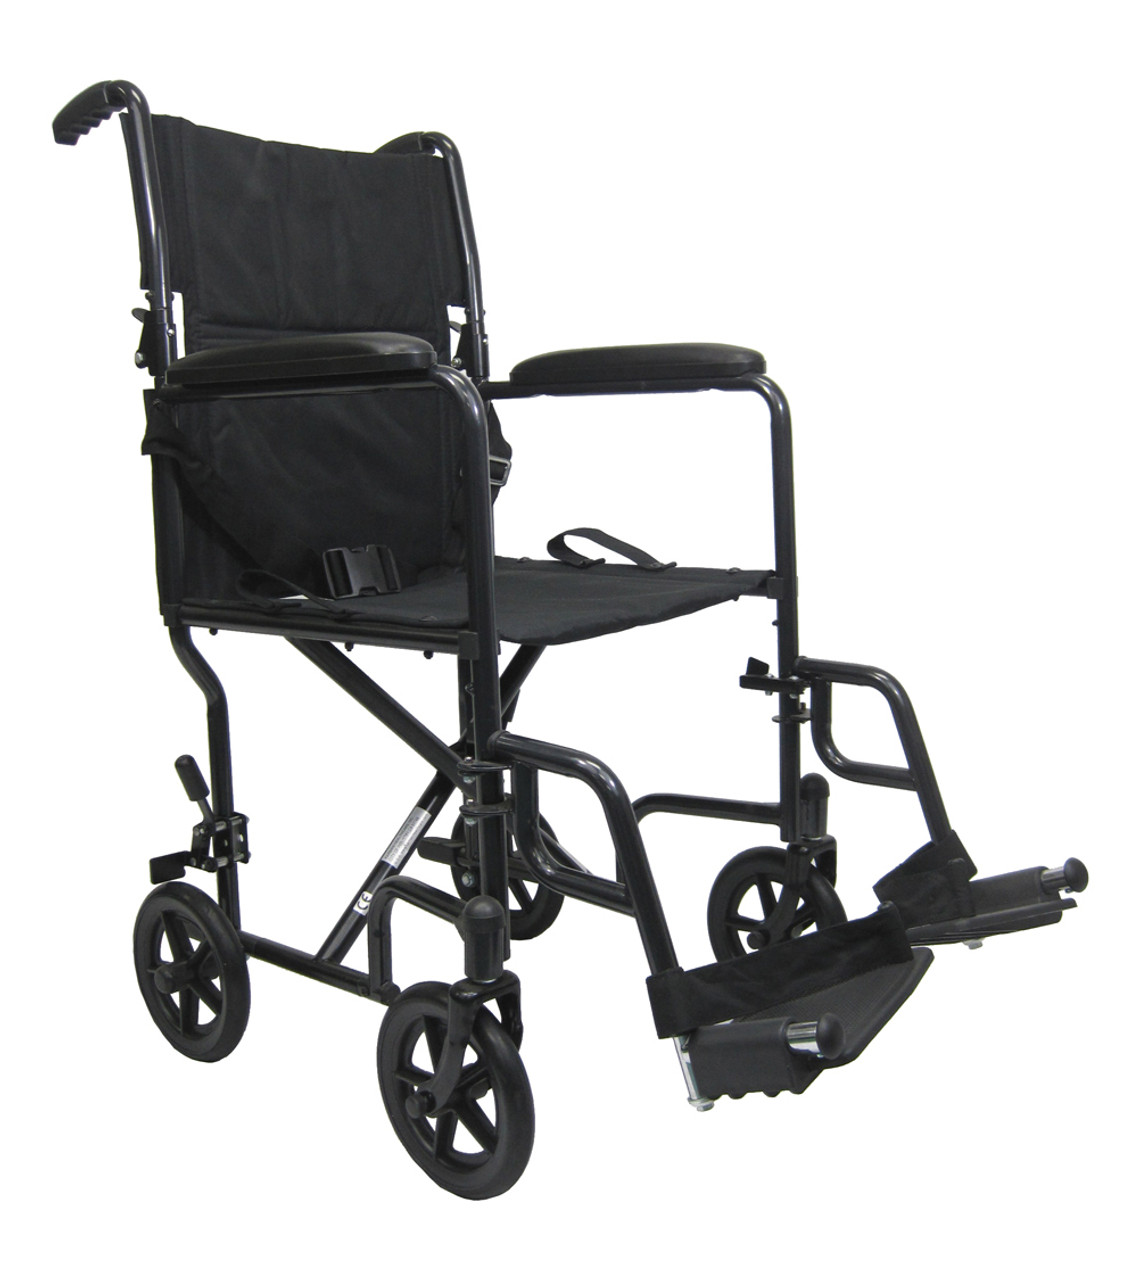 LT - 2017 Karman Transport Wheelchairs